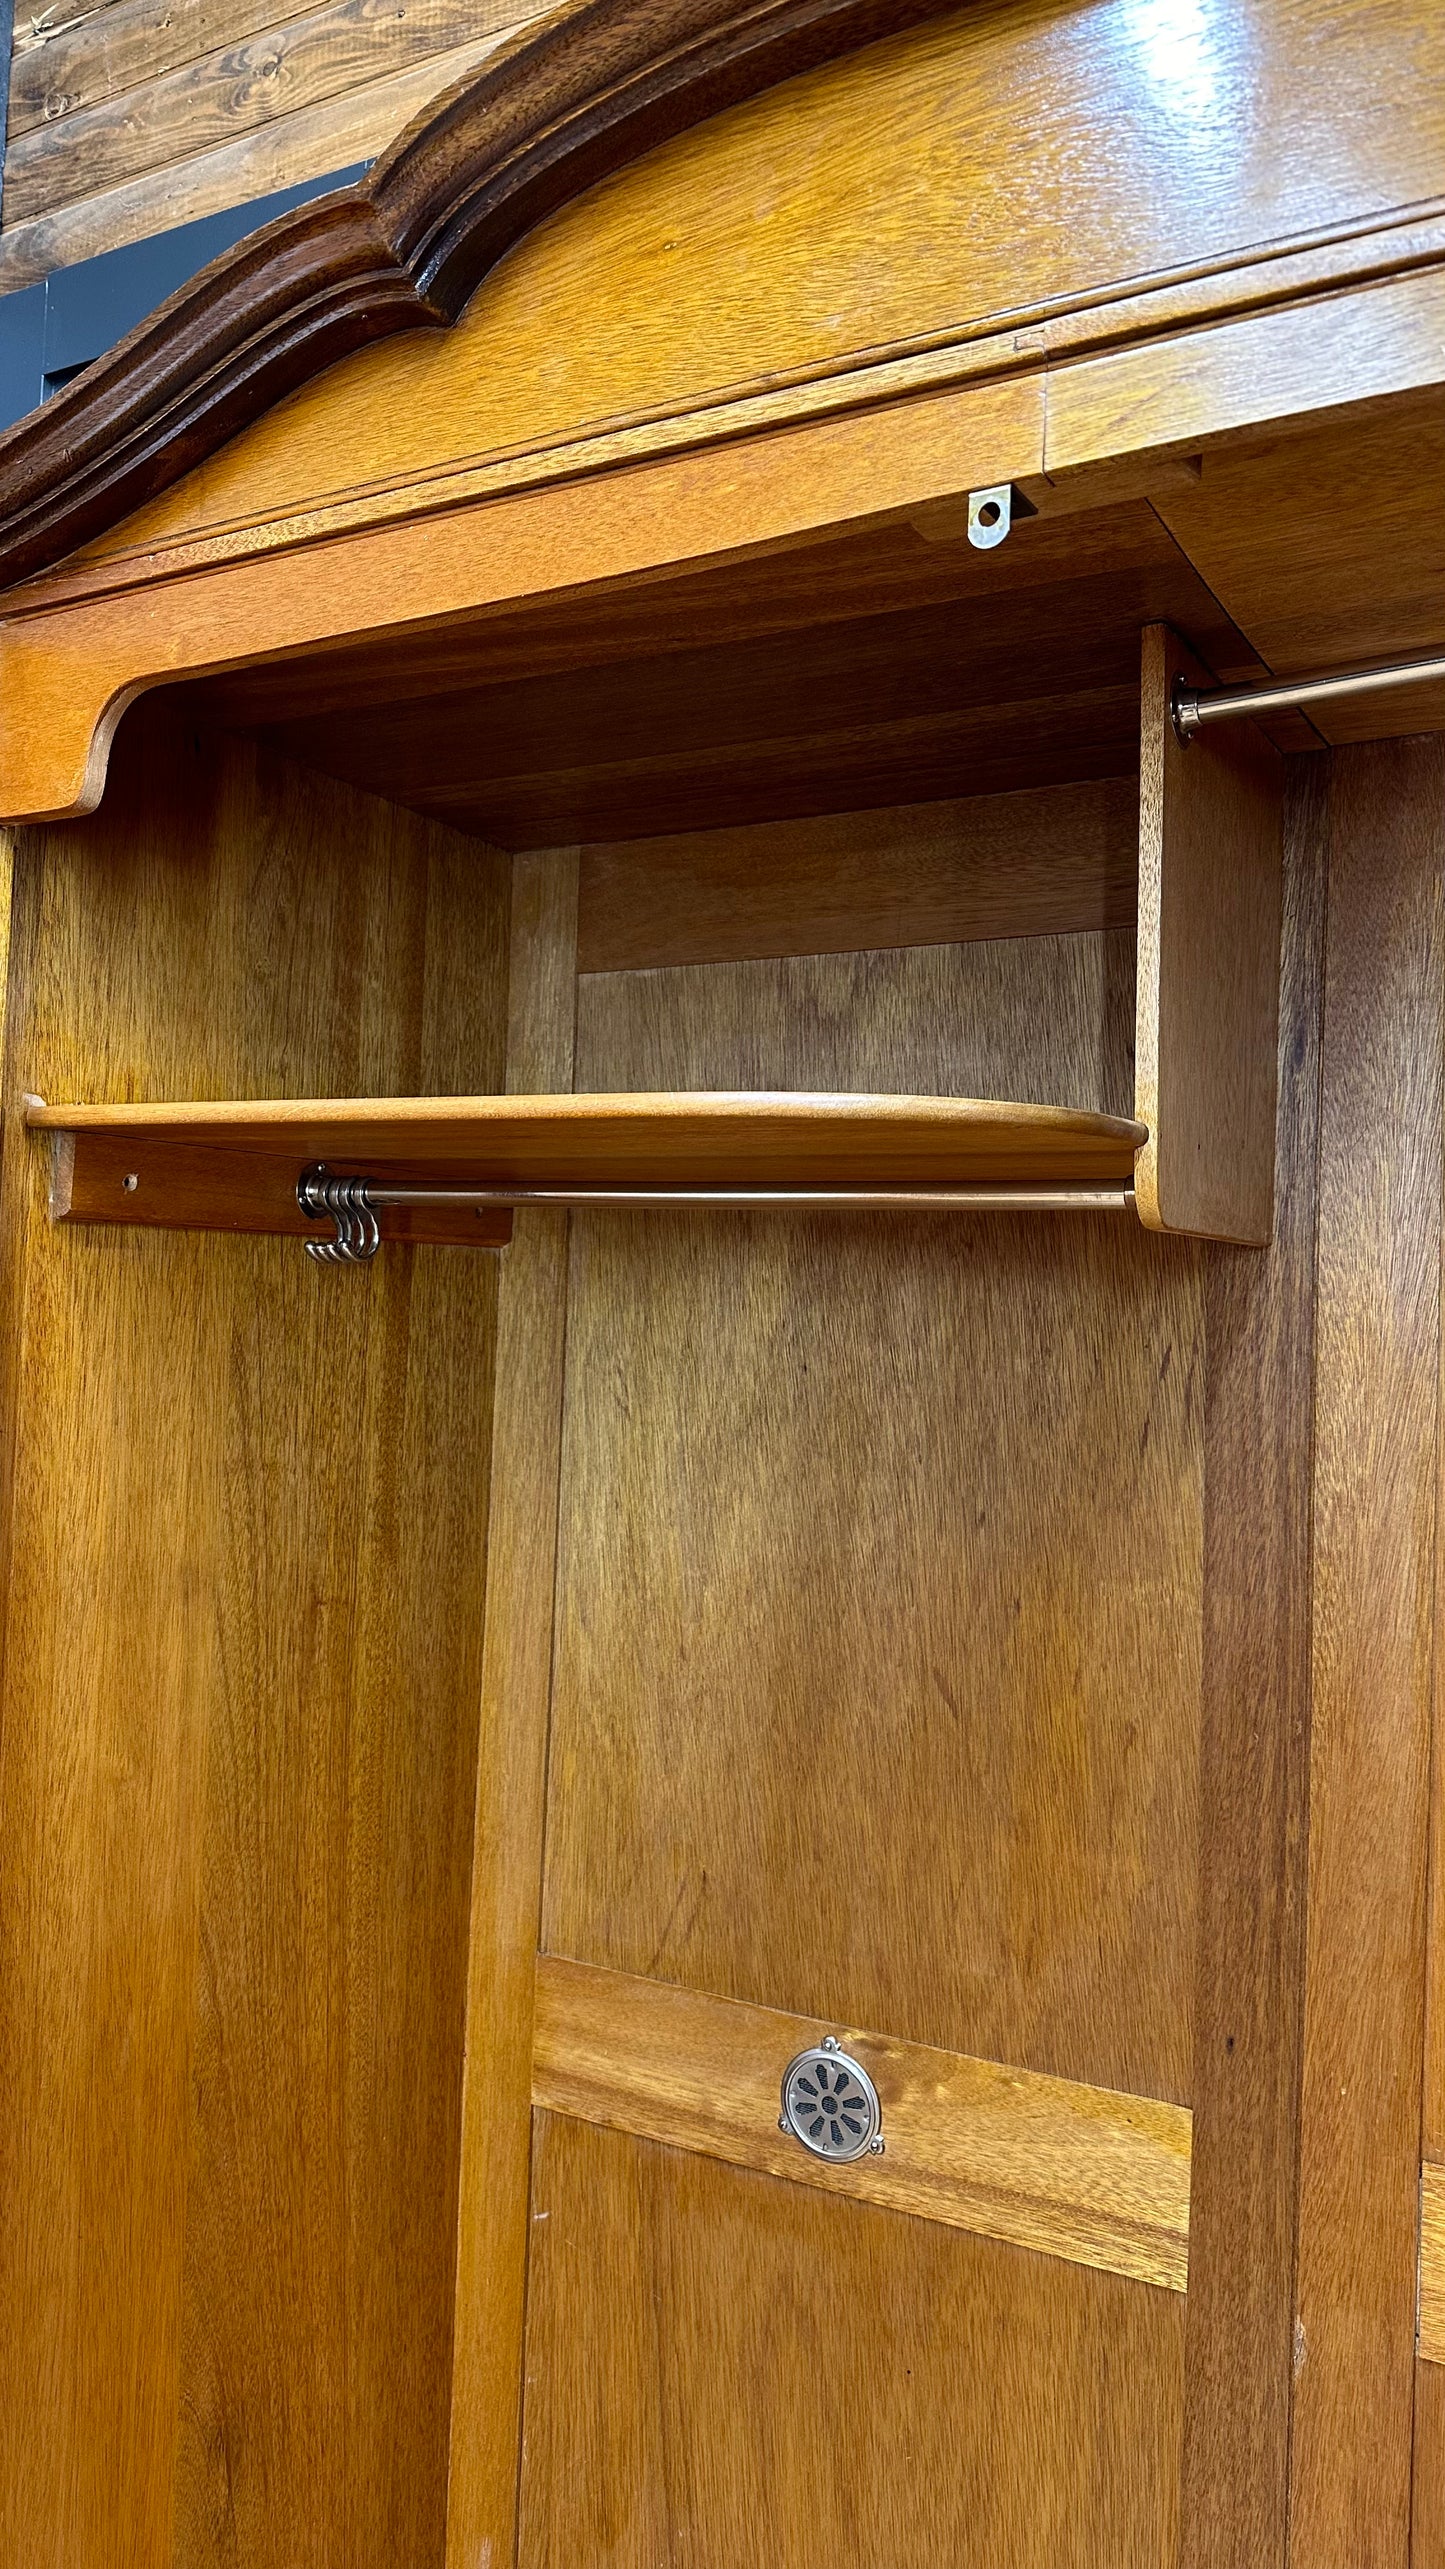 Antique Double Walnut Wardrobe / Armoire / Cupboard Bedroom Storage